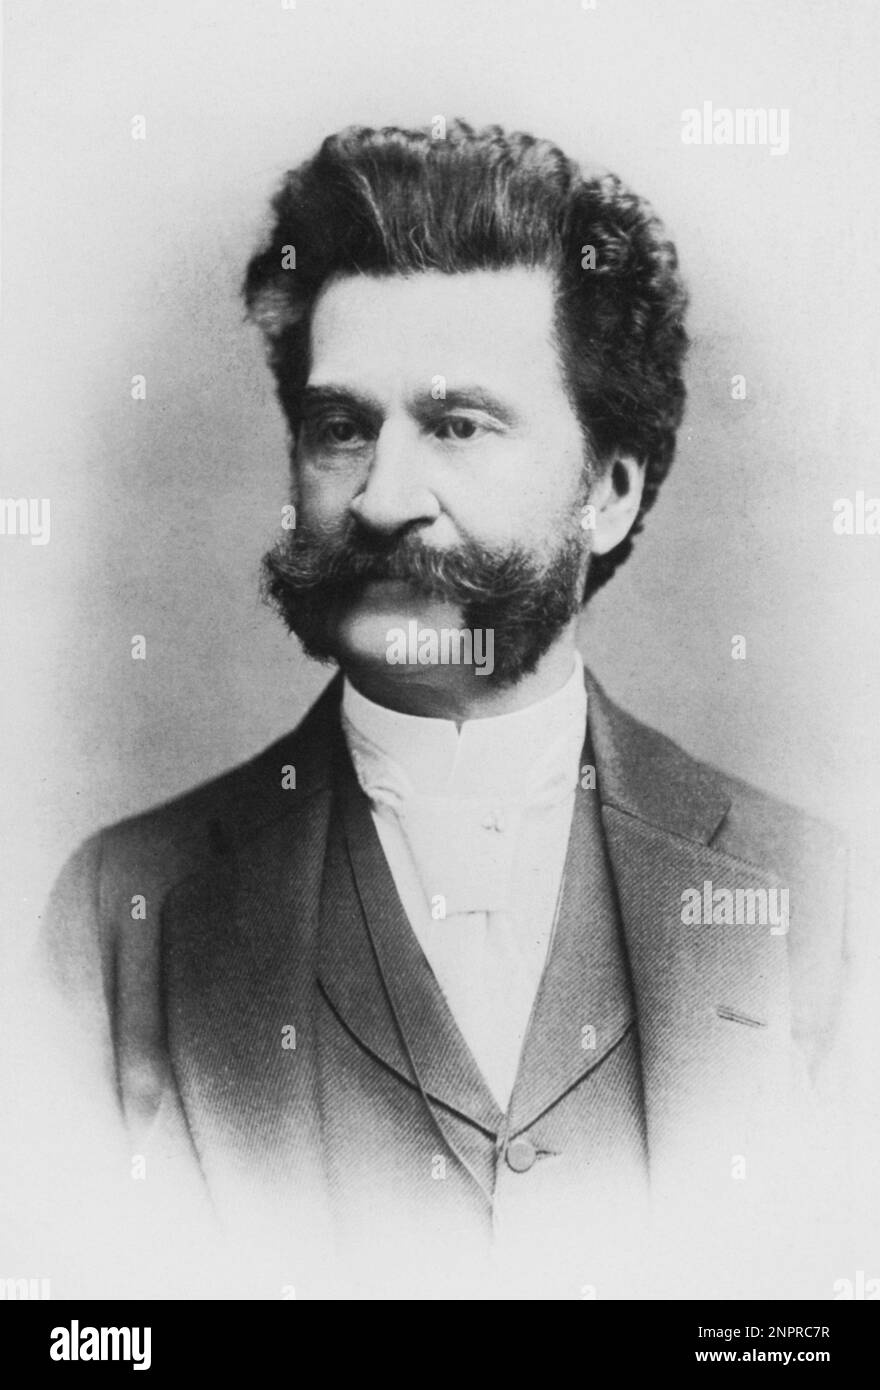 The austrian  music composer   JOHANN STRAUSS Jr ( 1825 - 1899 ) , dubbed the WALTZ KING , famous for the Operetta DIE FLEDERMAUS   - MUSICA CLASSICA - COMPOSITORE - portrait - ritratto - colletto - collar - tie - cravatta -  baffi - moustache - WALTZER - walzer   ----  Archivio GBB Stock Photo